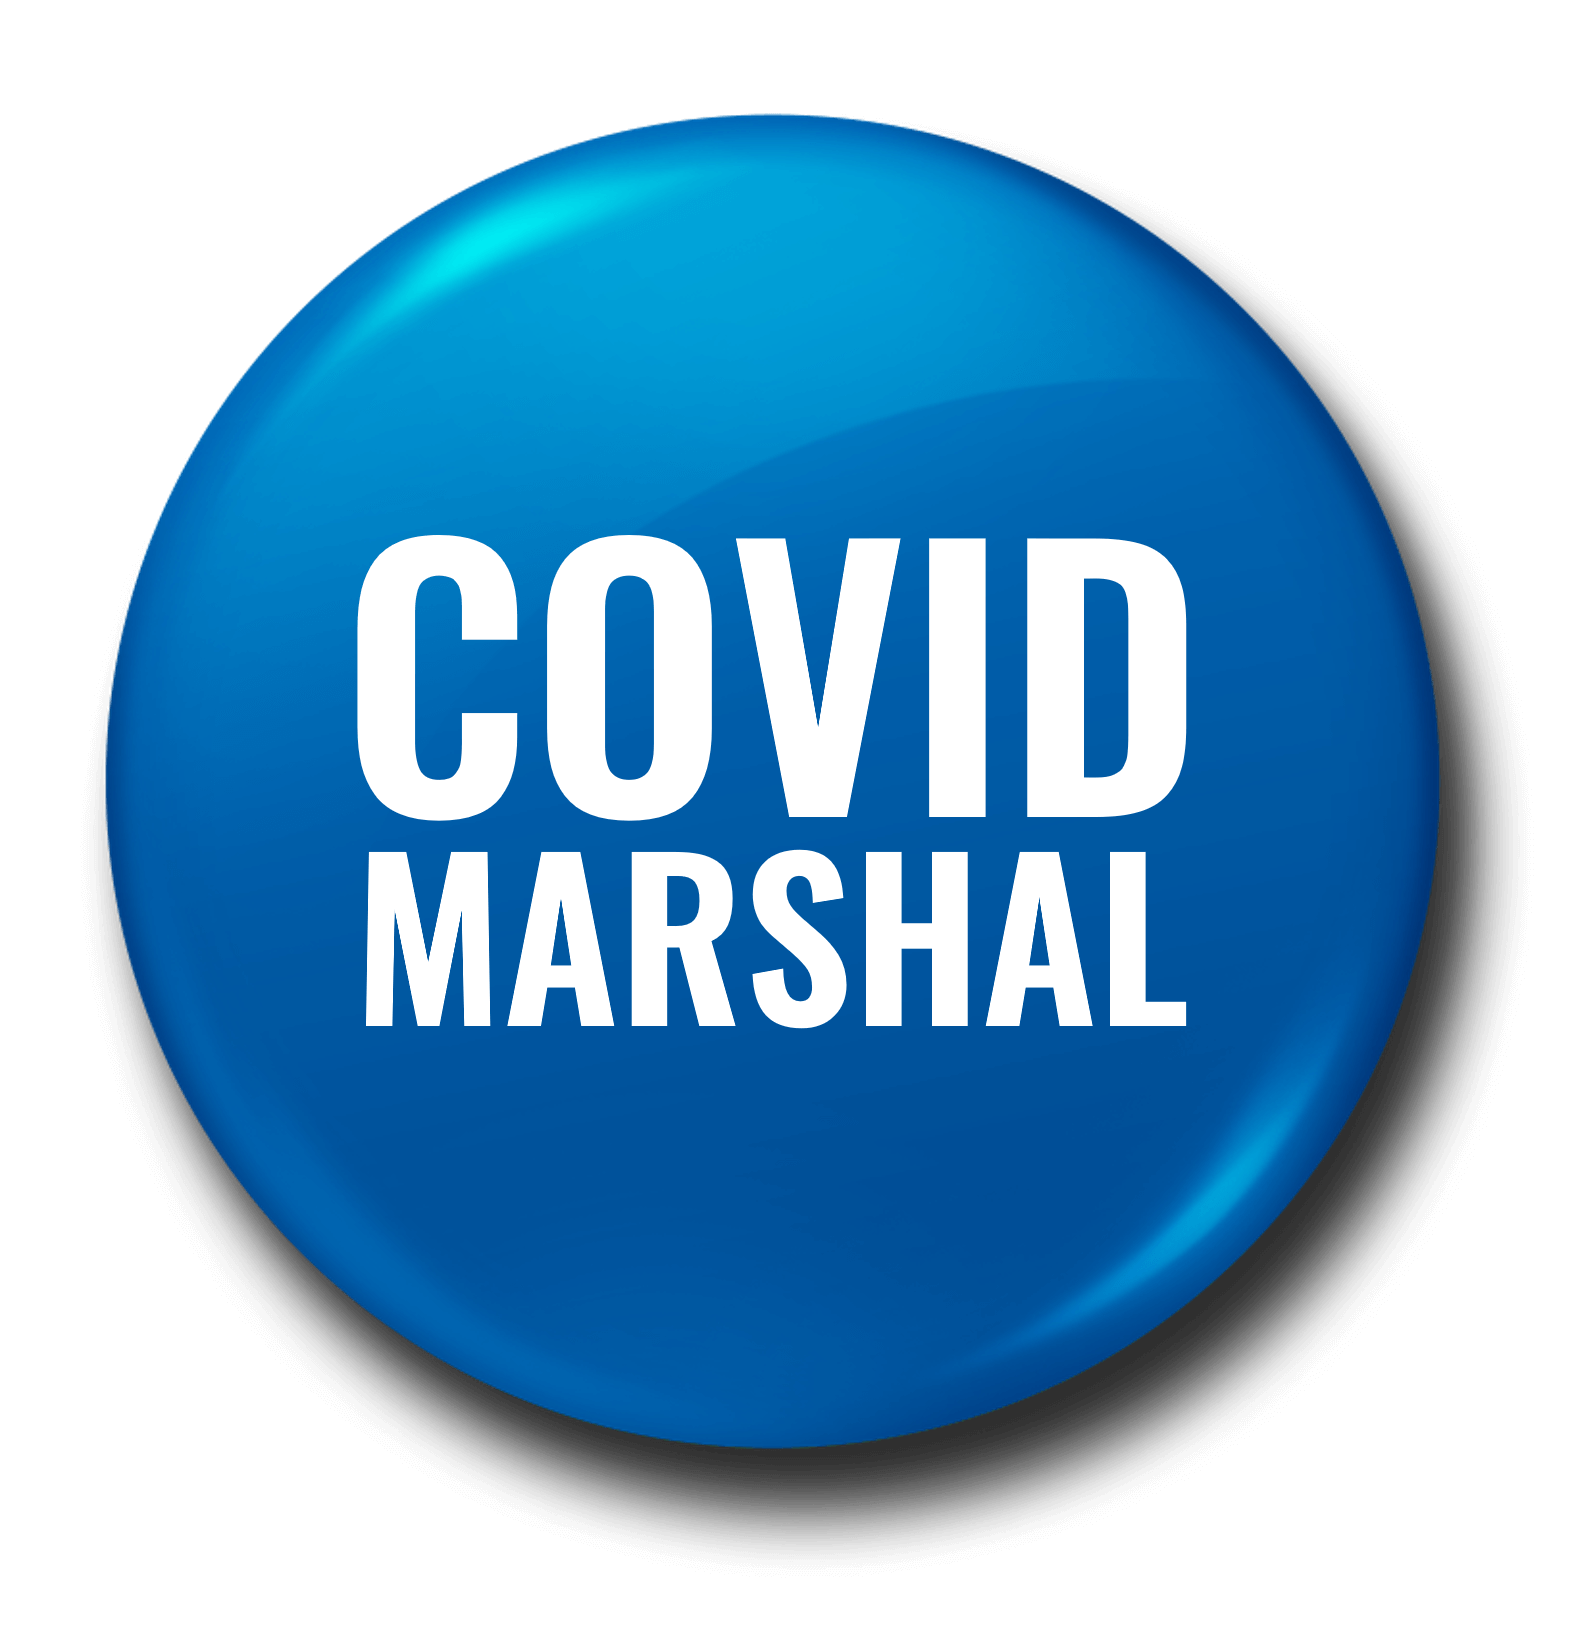 45mm COVID Marshal Badge | Made in Australia